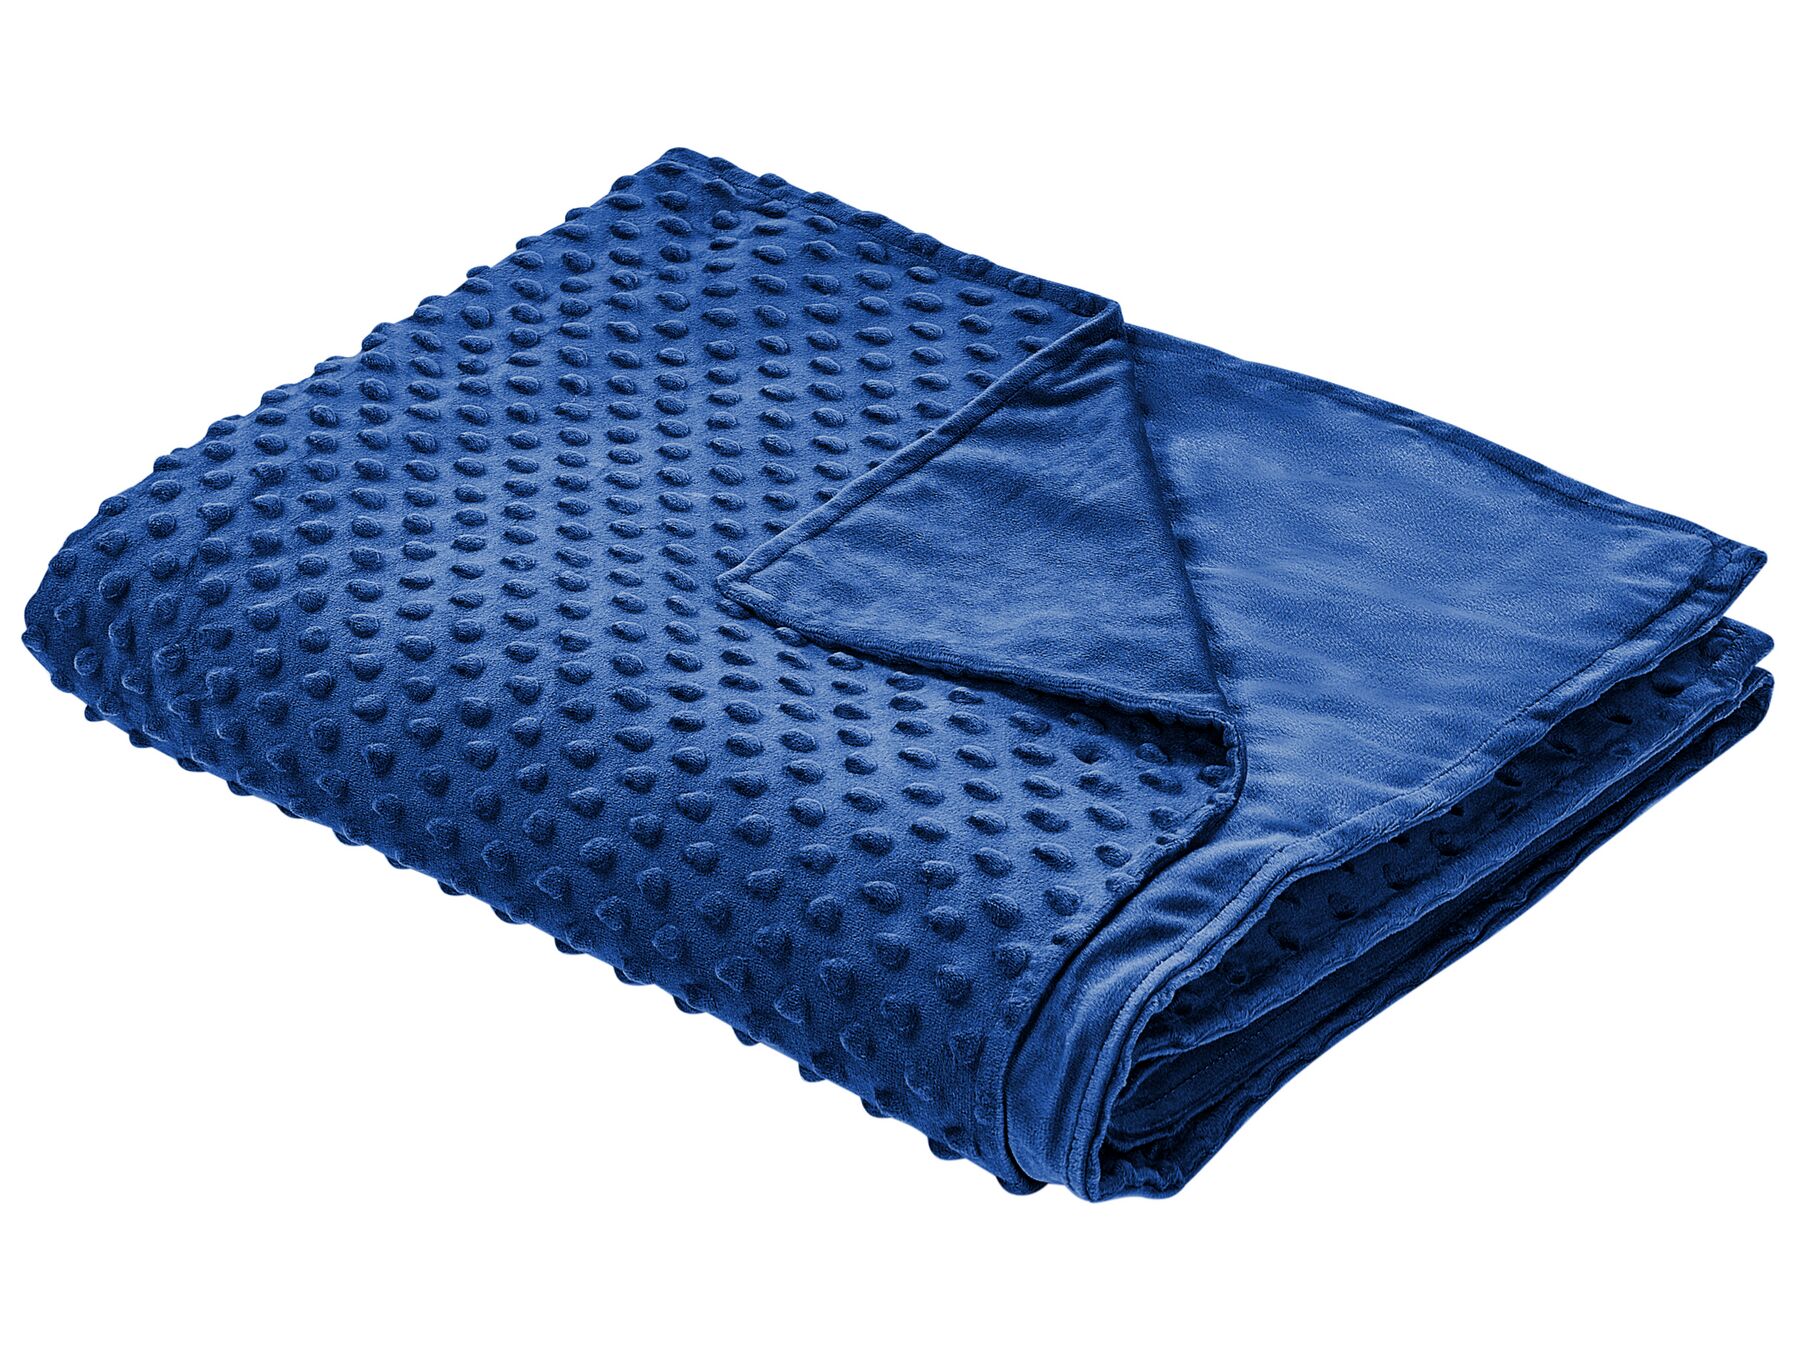 Fodera per coperta ponderata blu marino 120 x 180 cm CALLISTO_891861